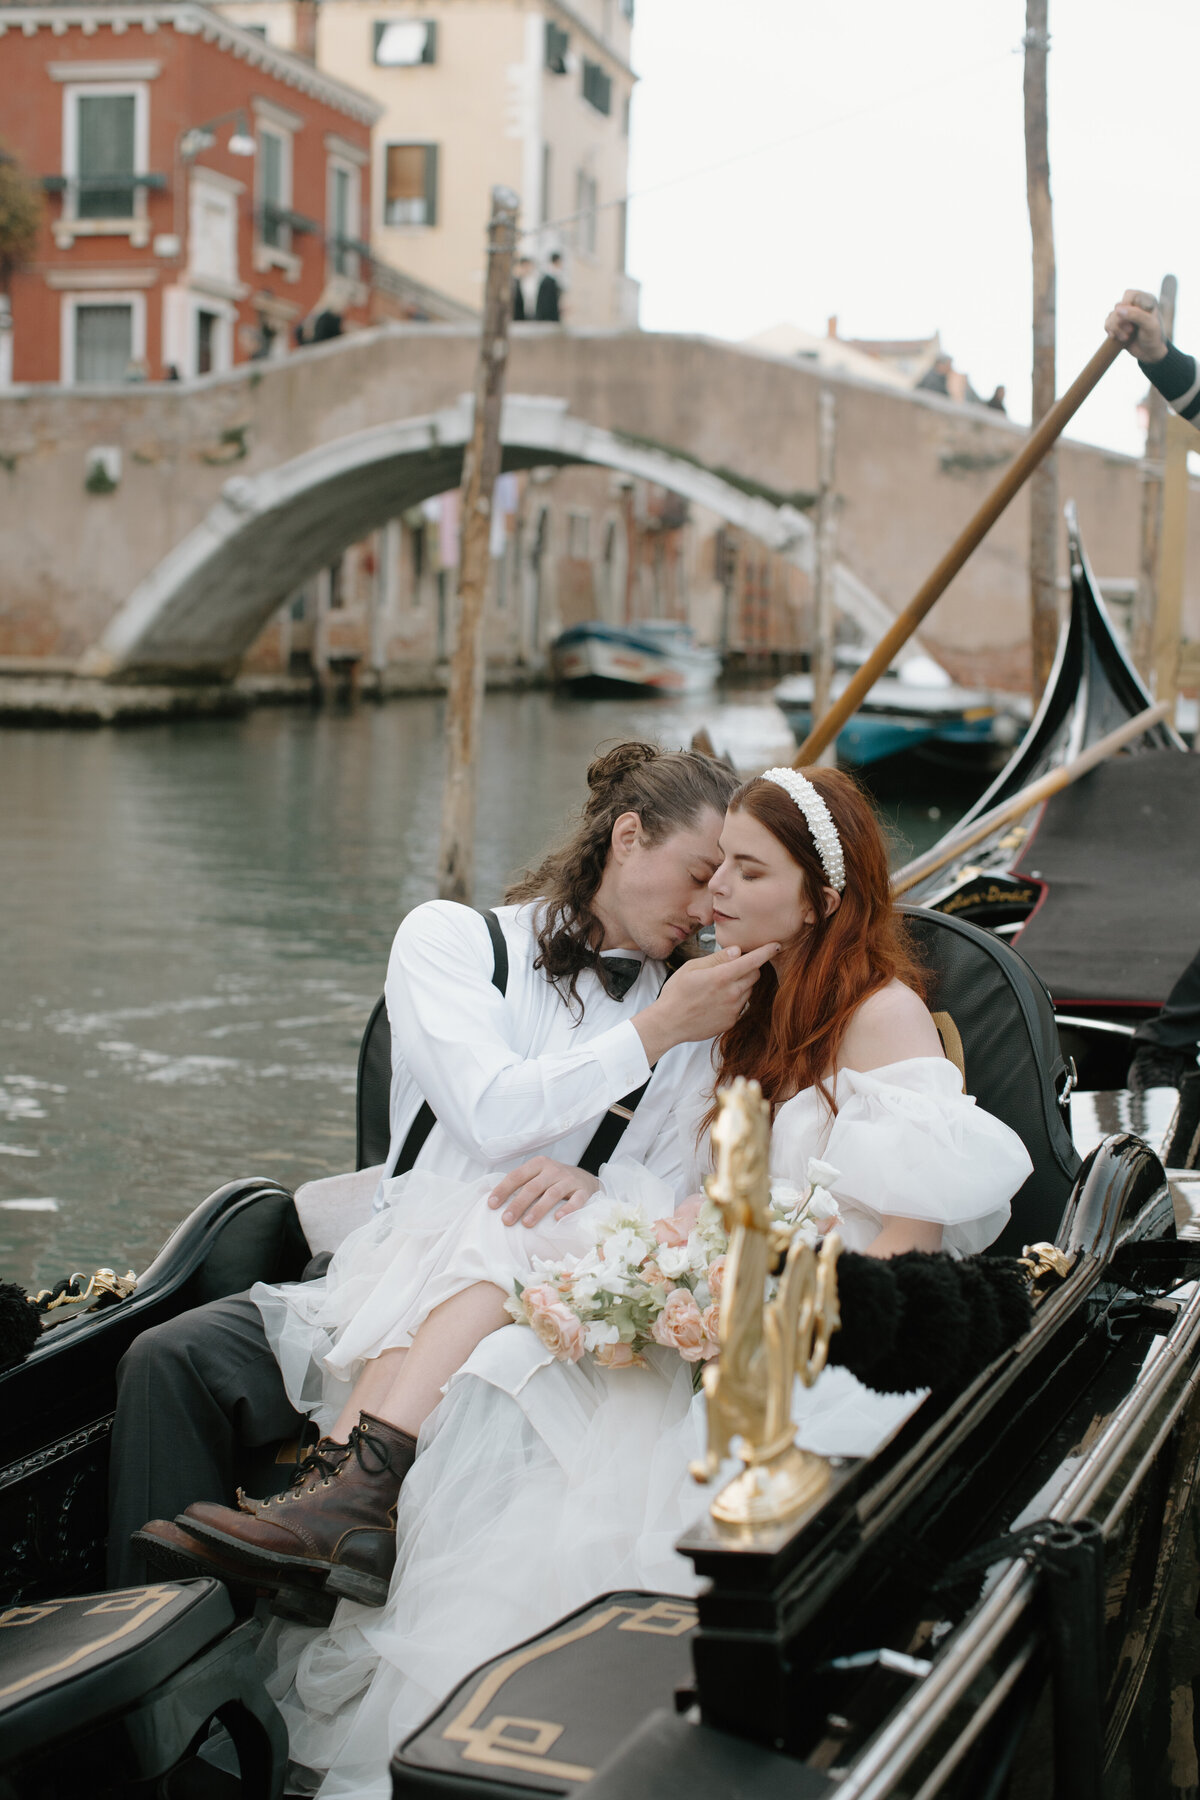 -Documentary-Style-Editorial-Vogue-gondola-Italy-Destination-Wedding-Leah-Gunn-PhotographyDocumentary-Style-Editorial-Vogue-gondola-Italy-Destination-Wedding-Leah-Gunn-Photography-53